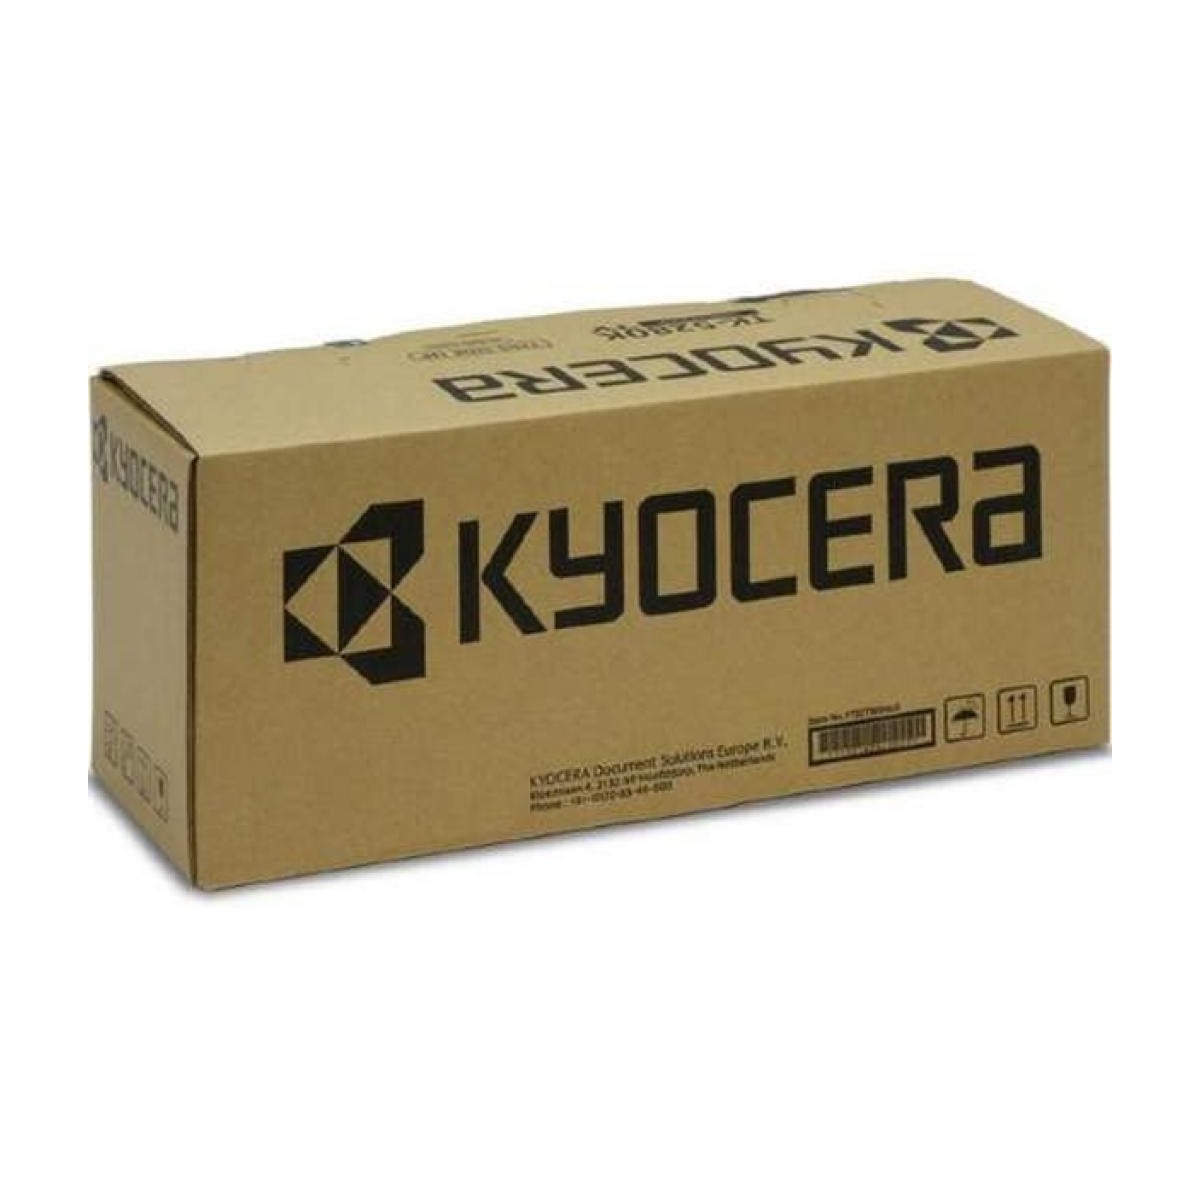 Kyocera DK-710 - Original - Kyocera - FS-9130DN - FS-9530DN - 1 pc(s) - 500000 pages - Laser printing